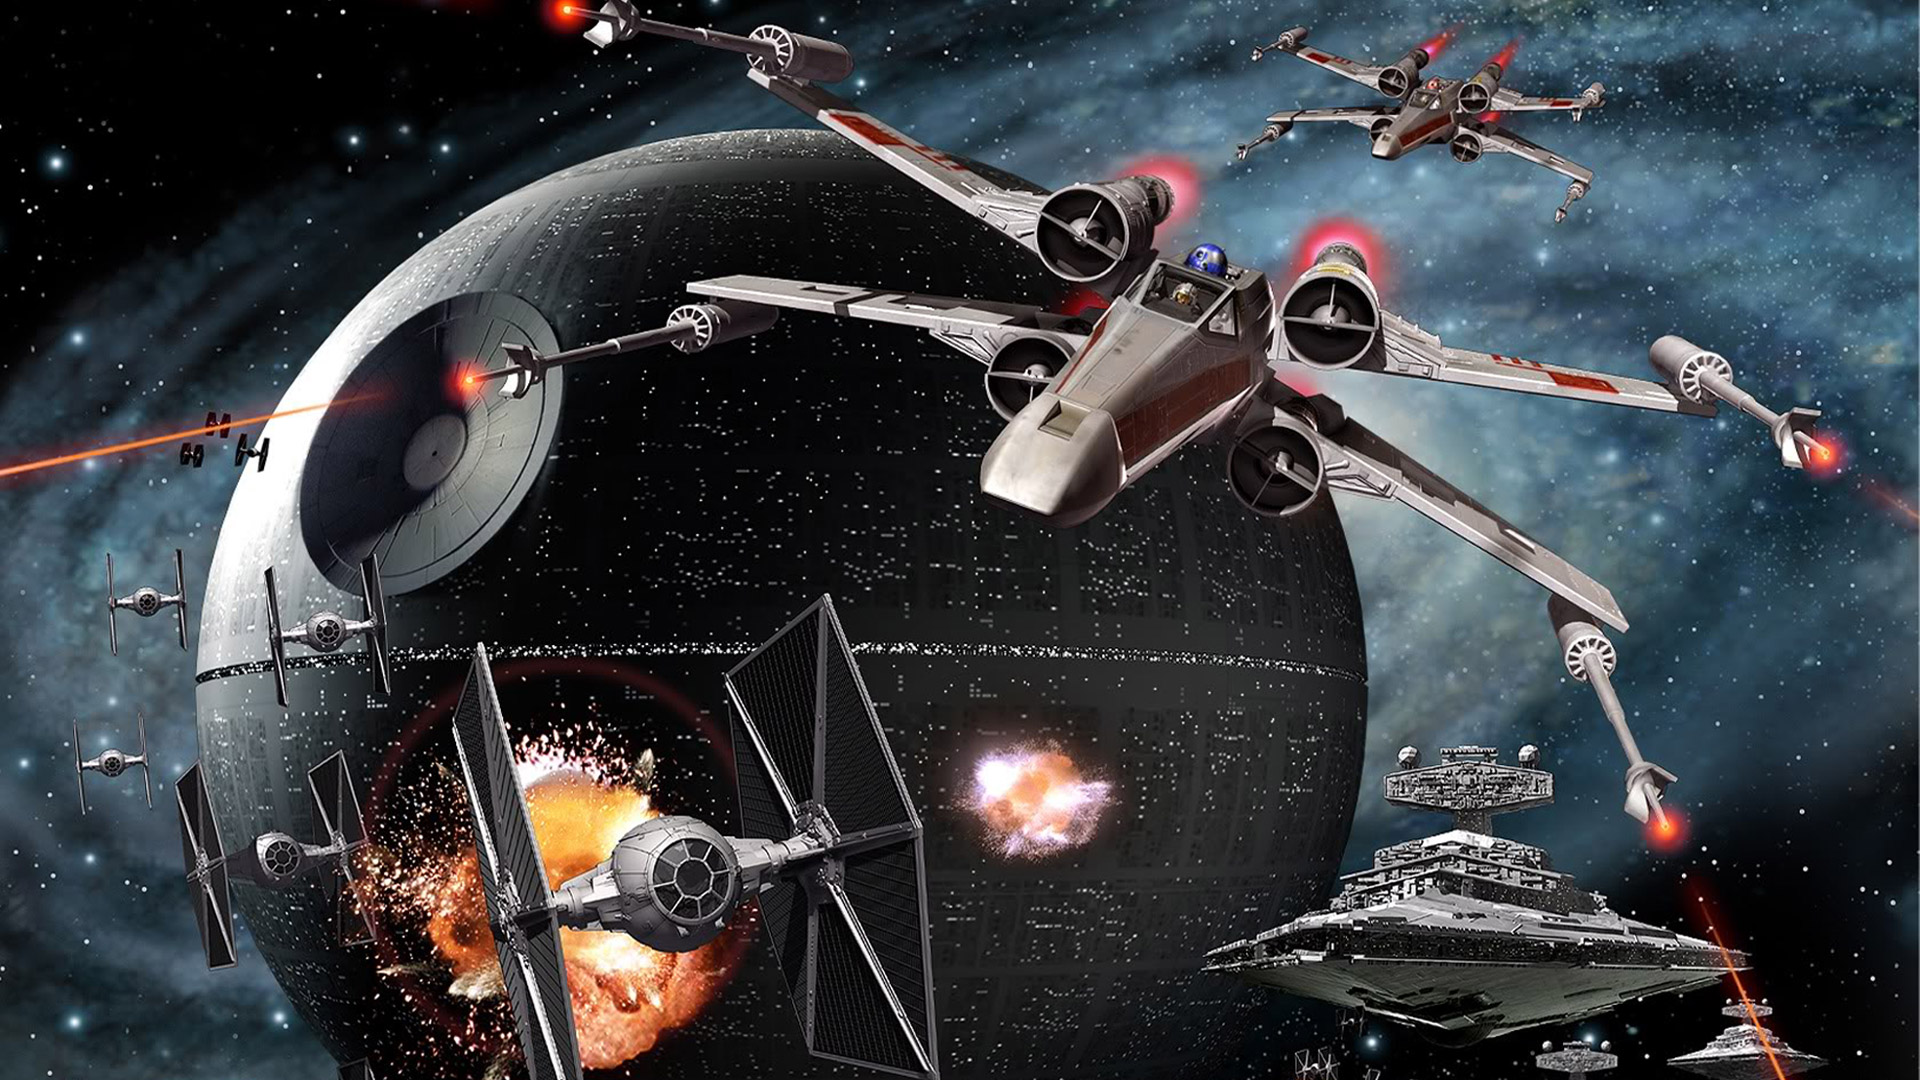 Star Wars War Ships Wallpaper High Resolution Full Size